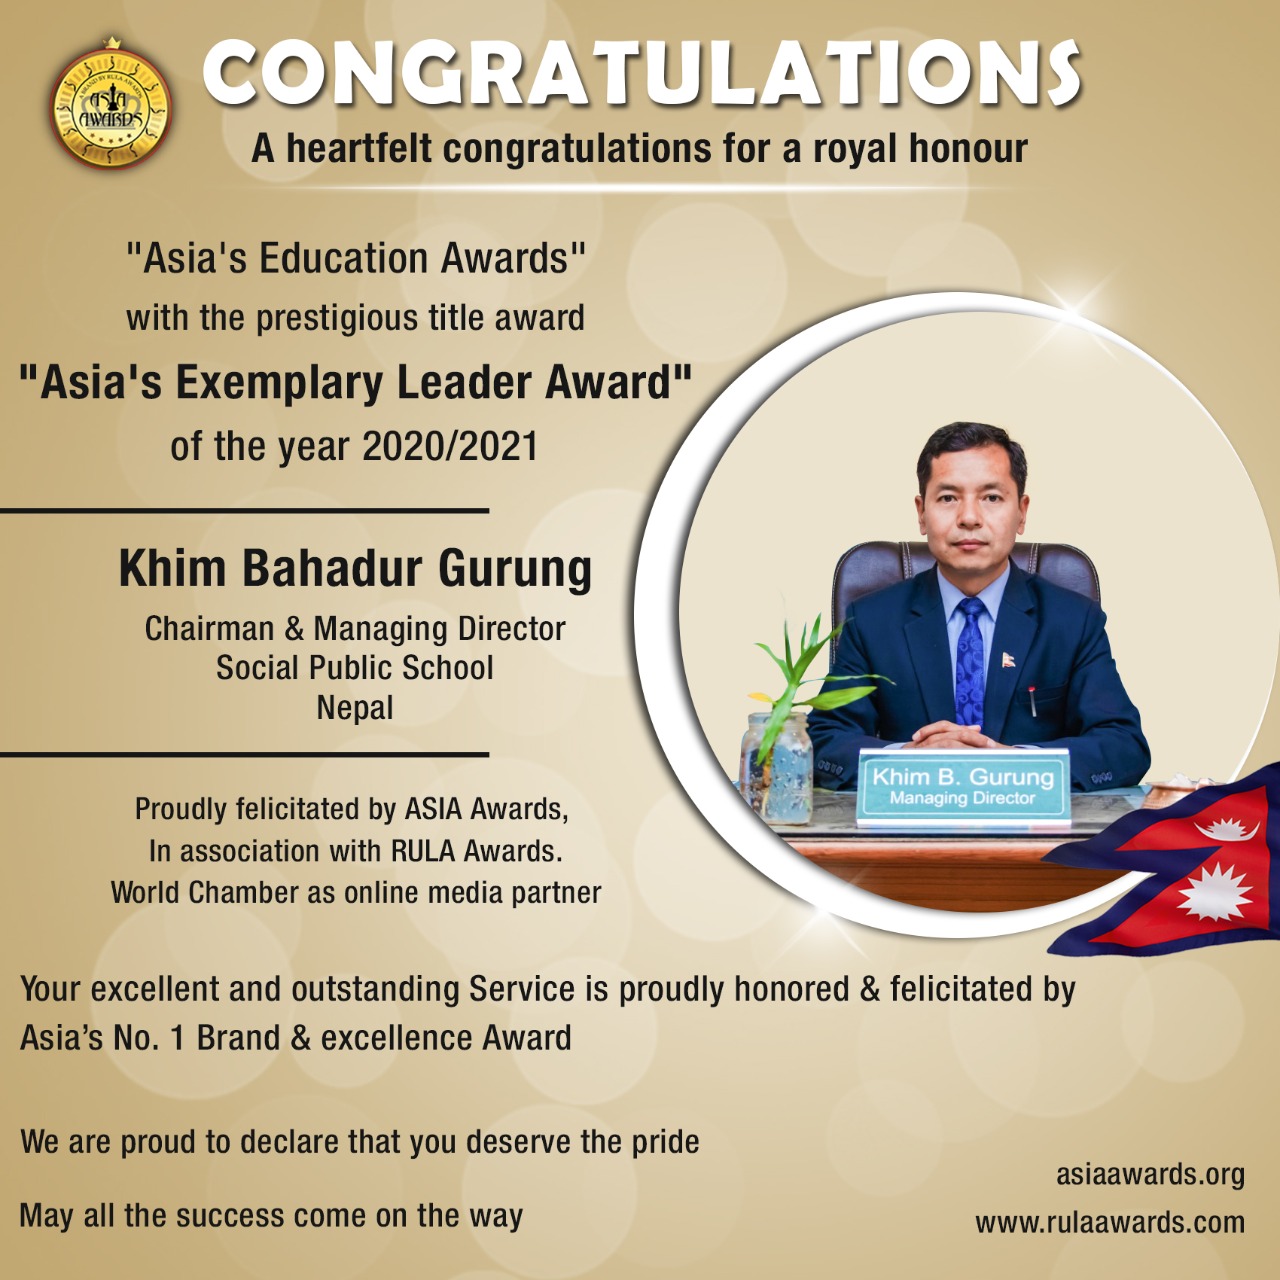 Khim Bahadur Gurung has bagged Asia's Exemplary Leader Award